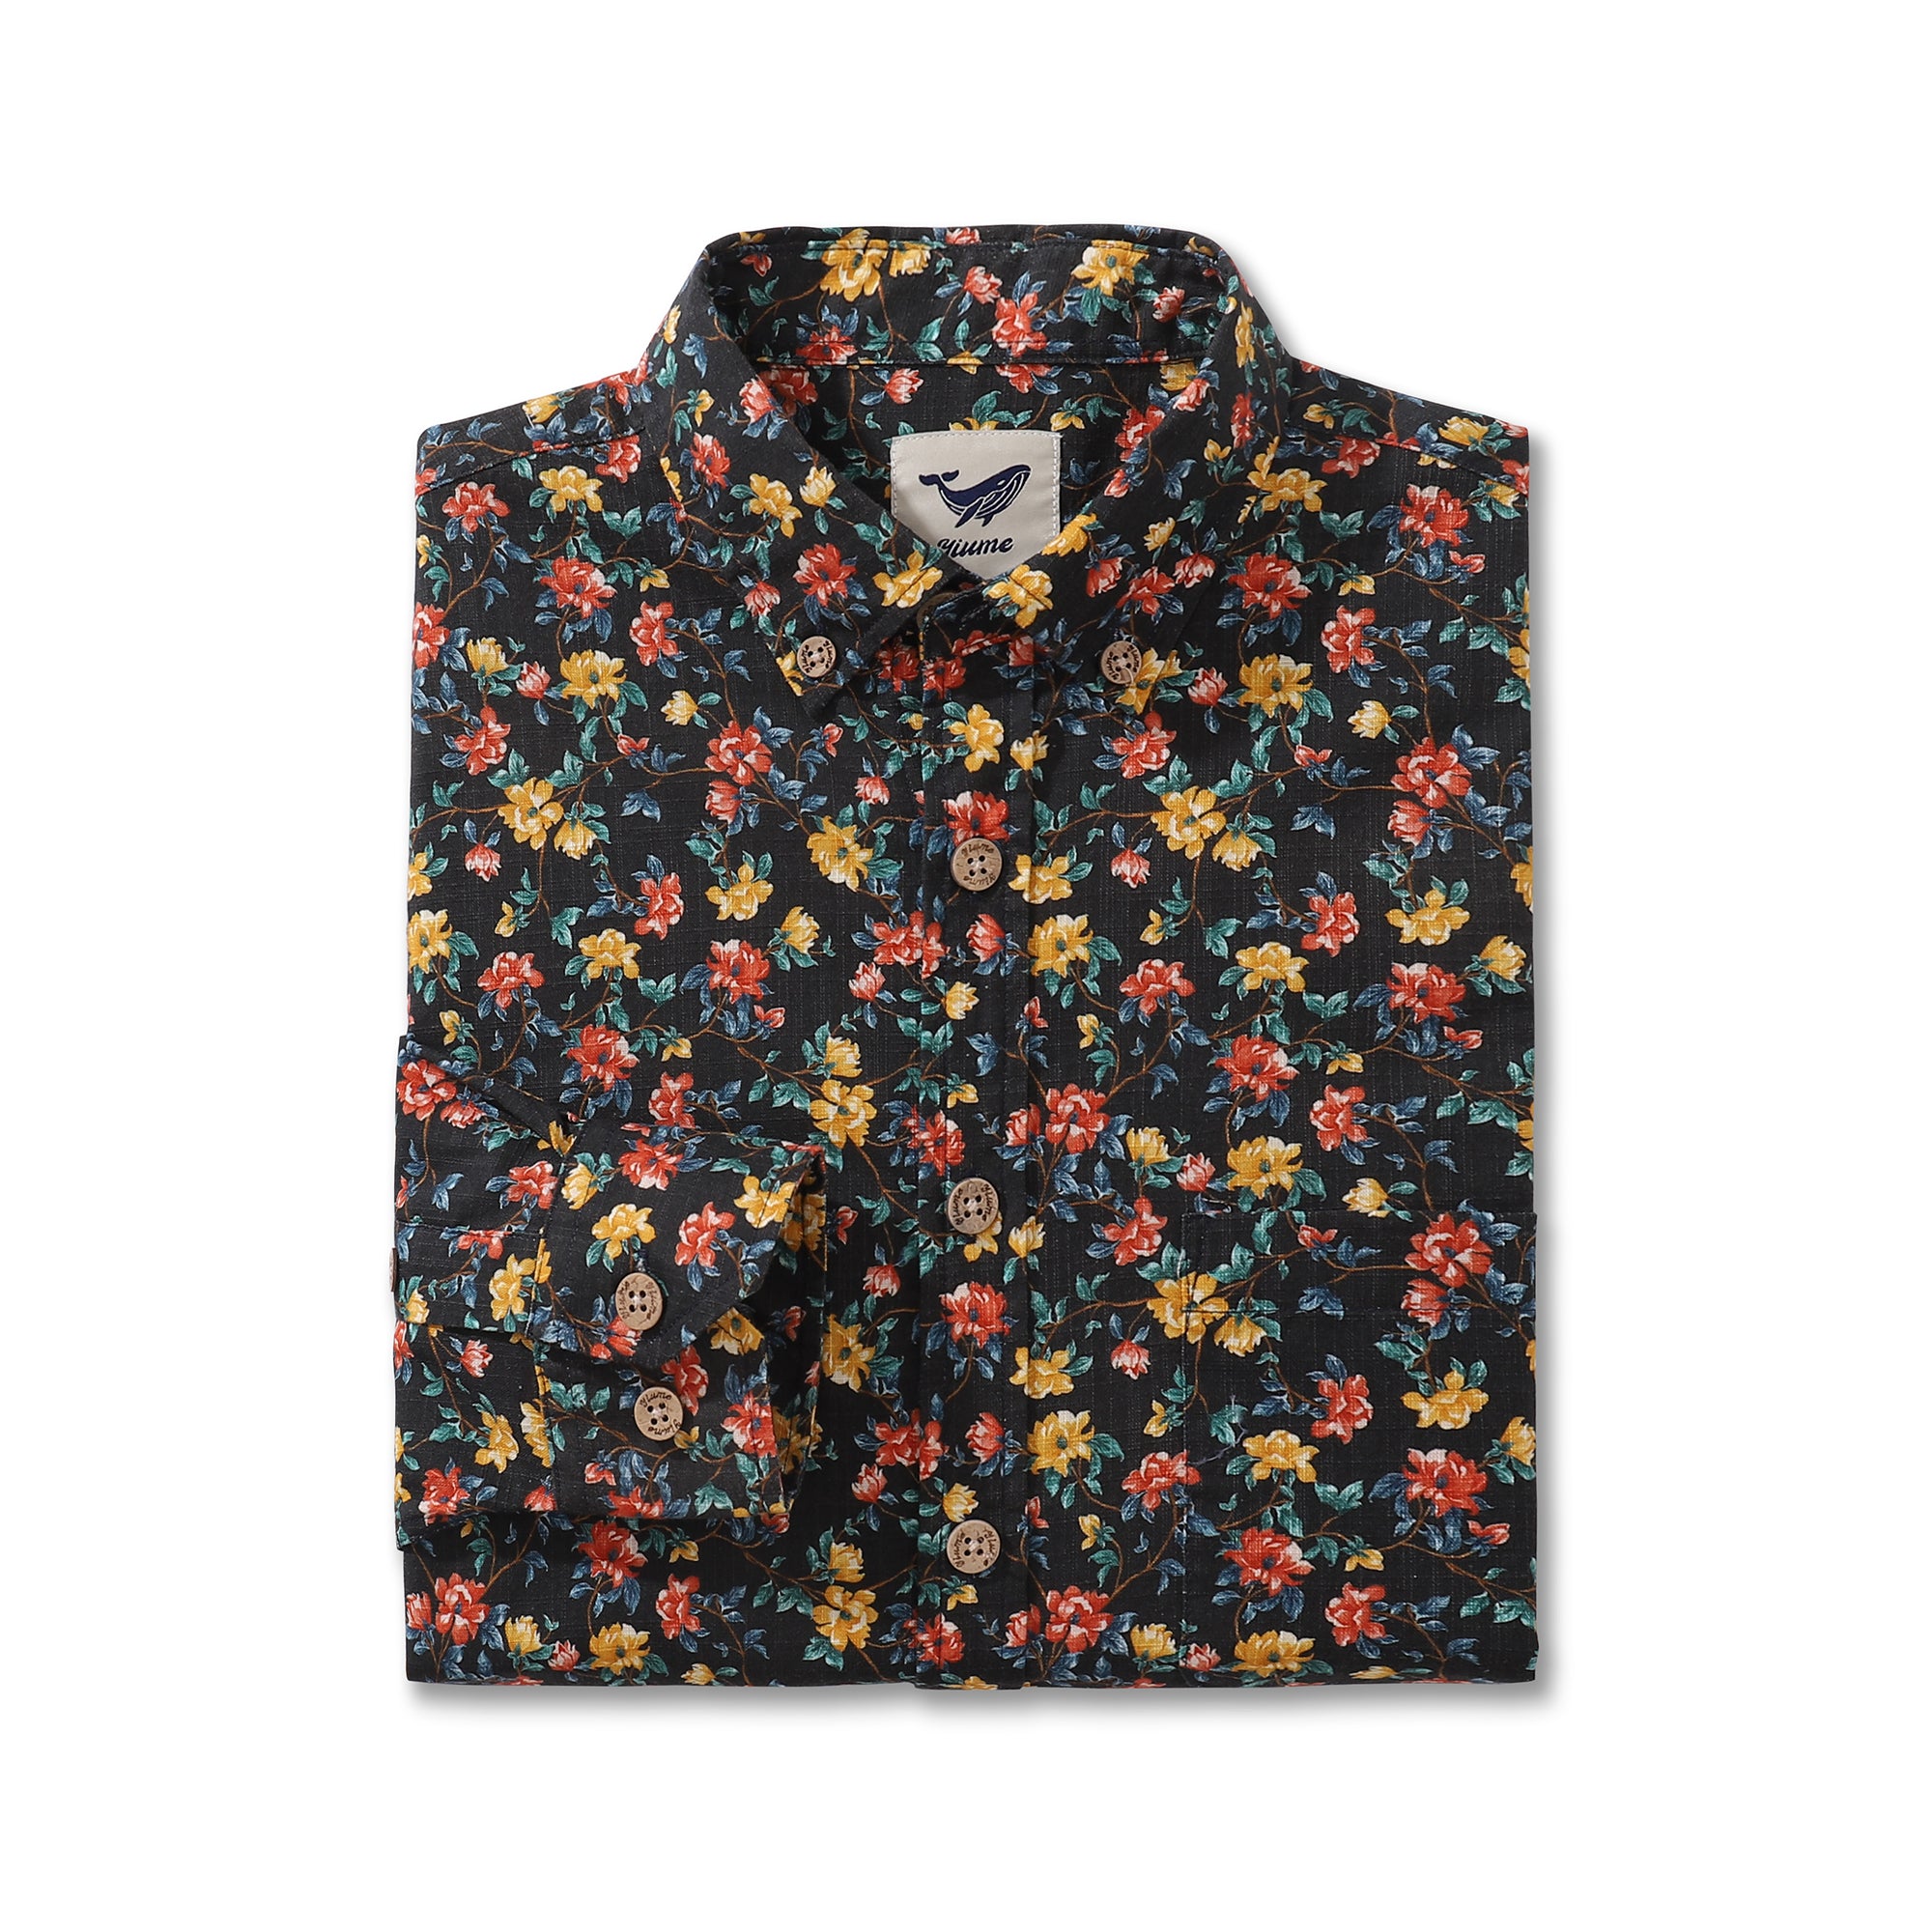 Men's Hawaiian Shirt Blossoms in the Dark Cotton Button-down Long Sleeve Aloha Shirt